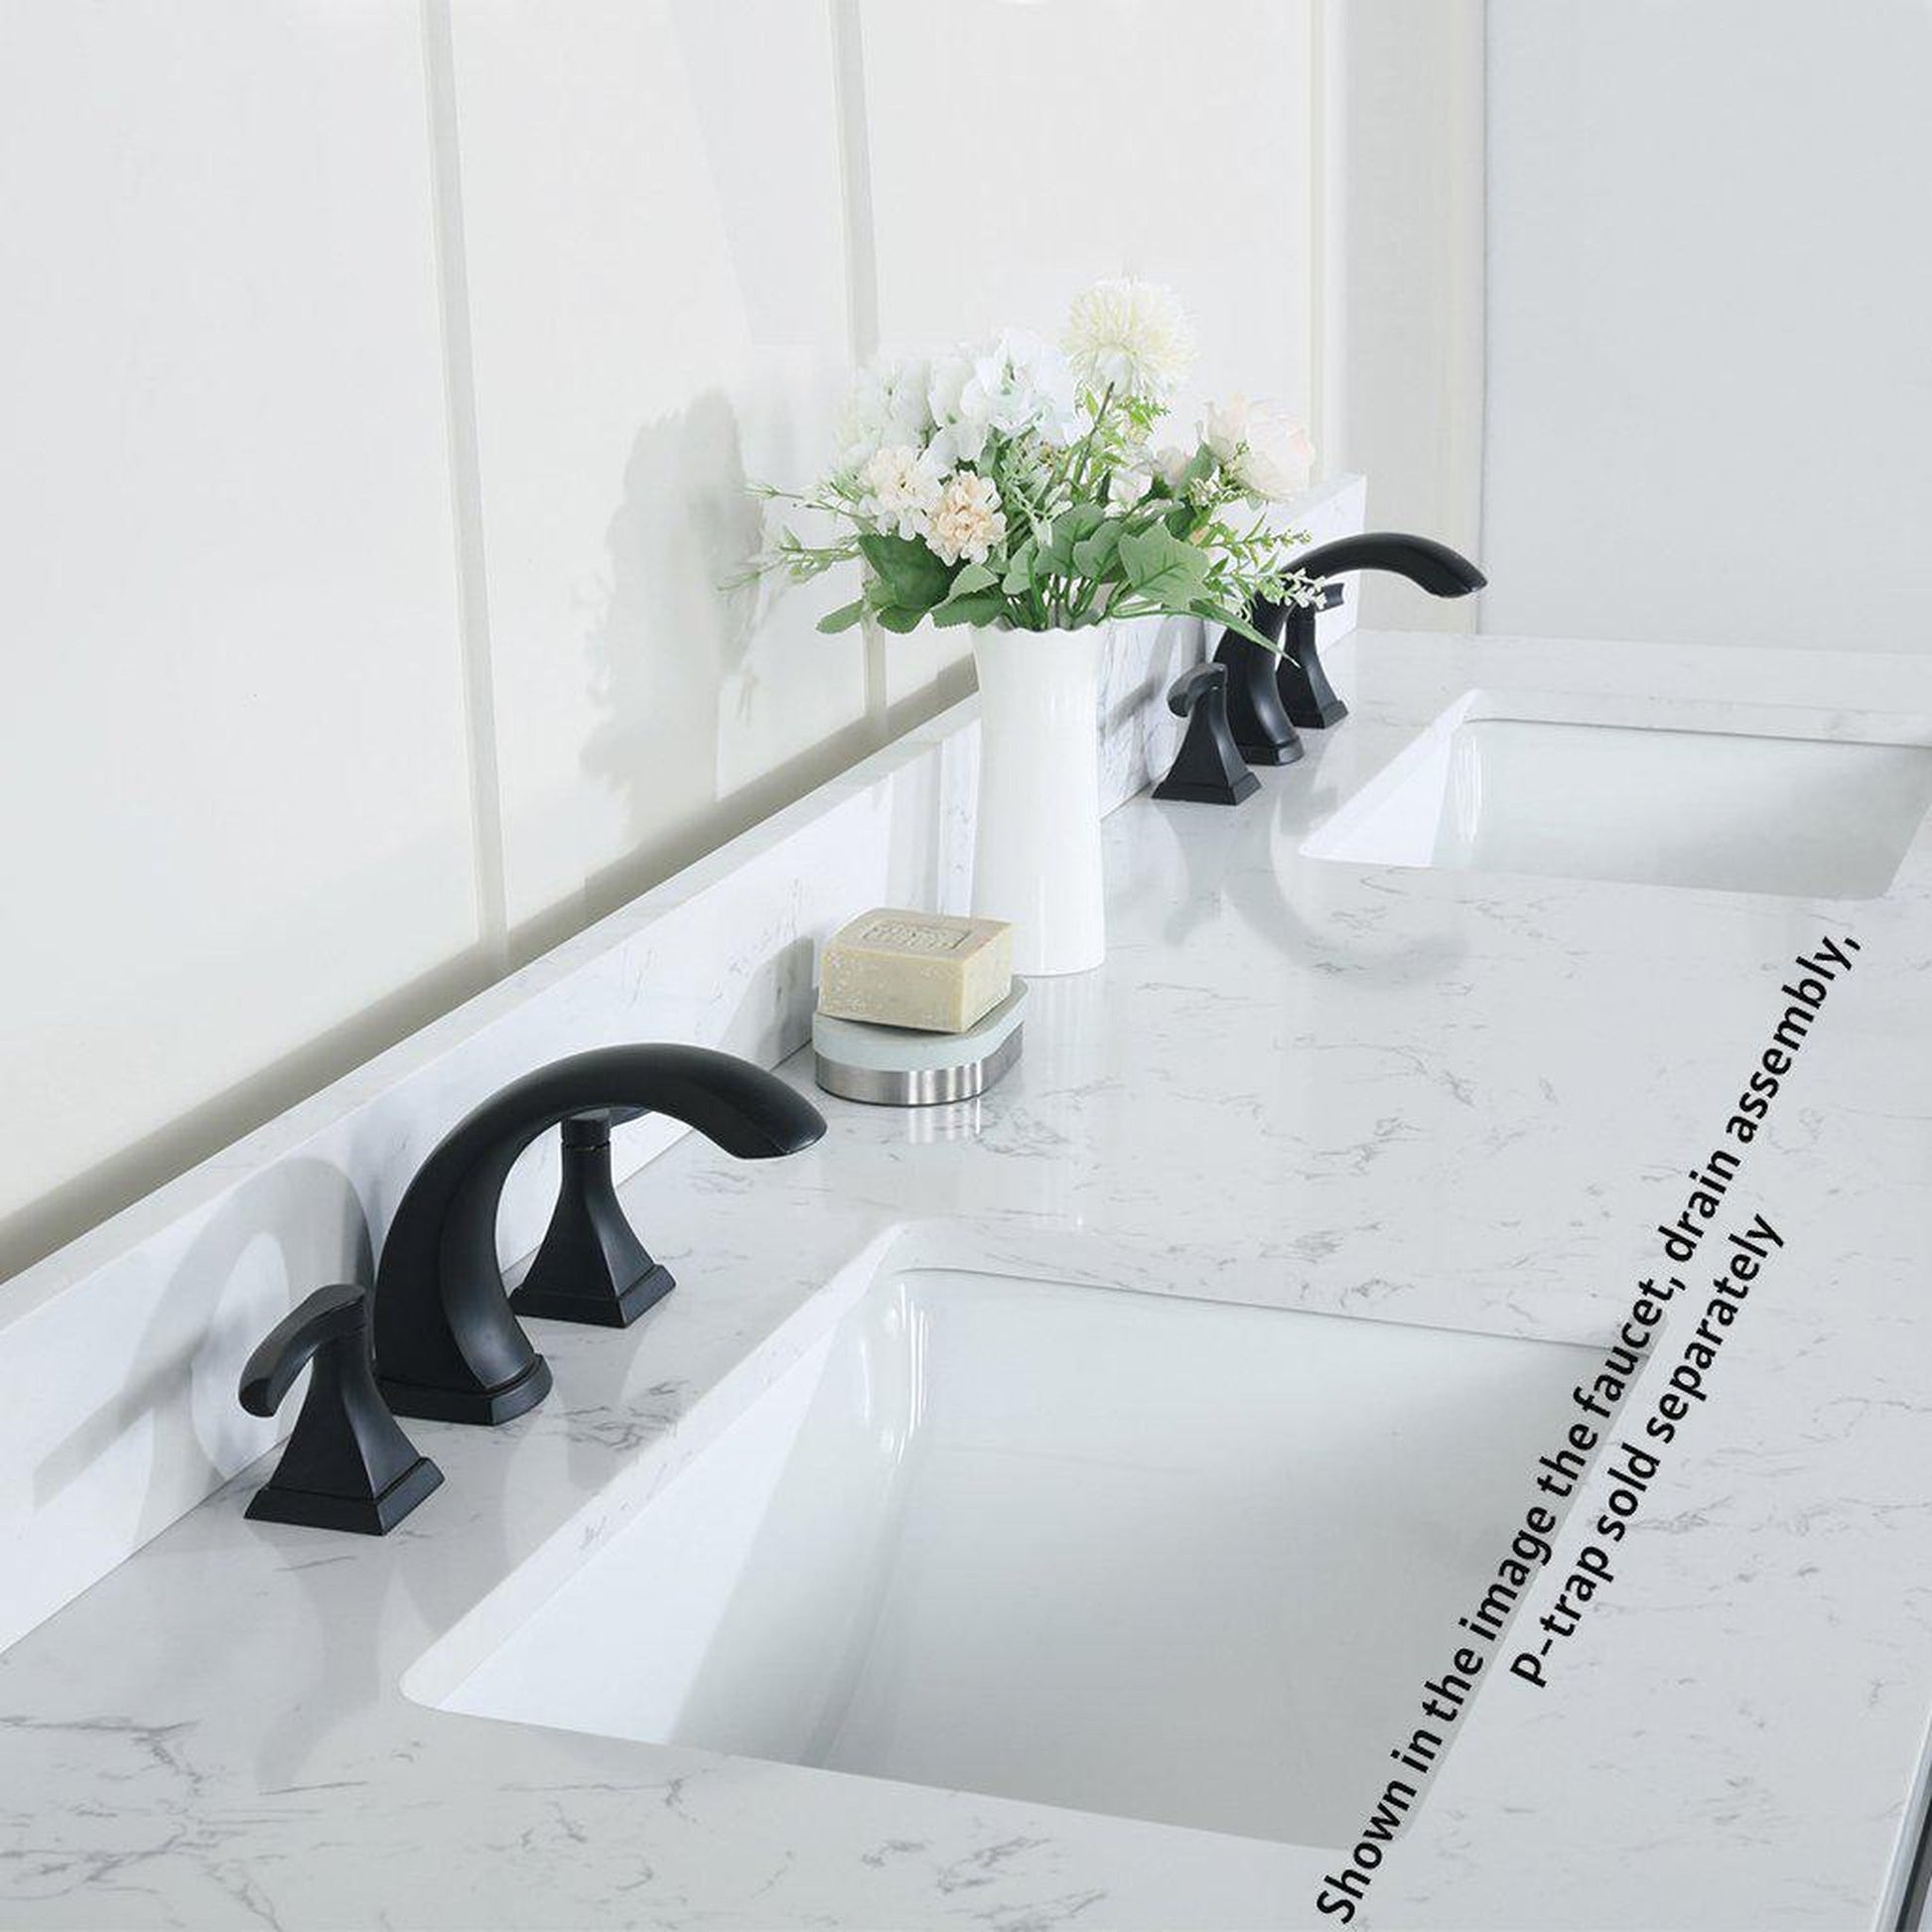 Altair Kinsley 72" Double White Freestanding Bathroom Vanity Set With Mirror, Aosta White Composite Stone Top Two Rectangular Undermount Ceramic Sinks, Overflow, and Backsplash